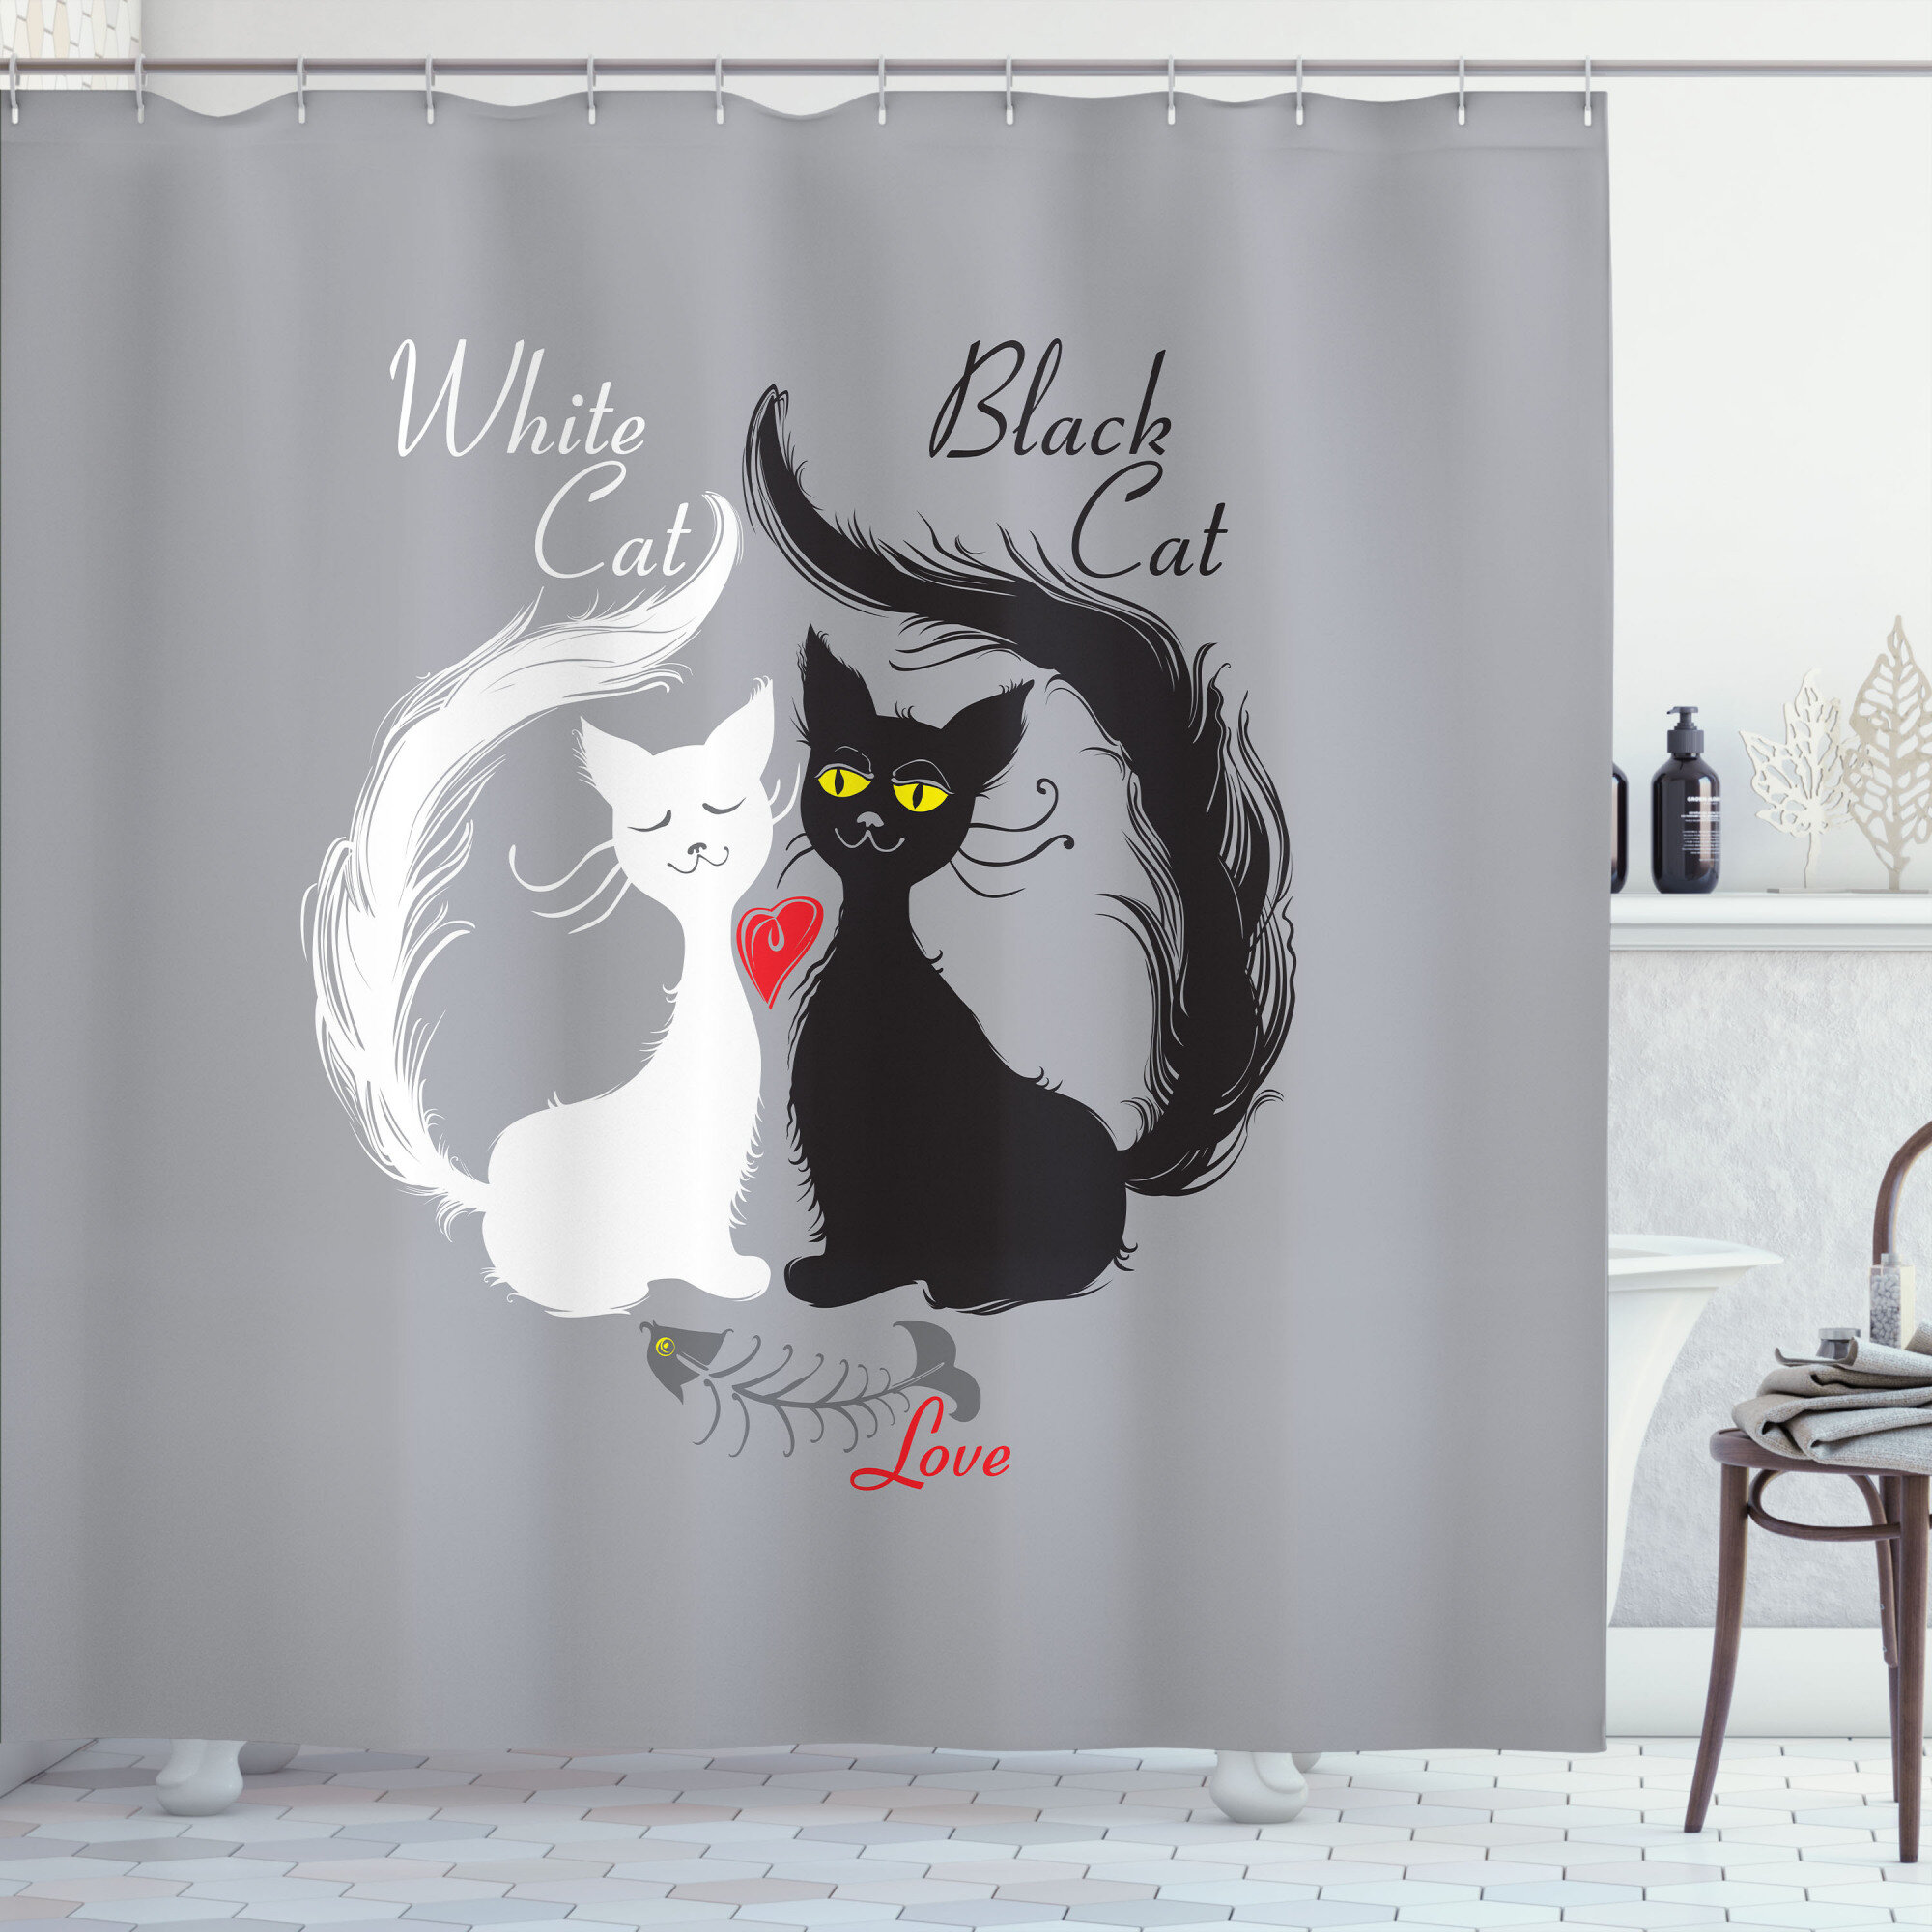 Catch Fish Black Cat Shower Curtain Set Bathroom Curtains Bath Accessories Liner 